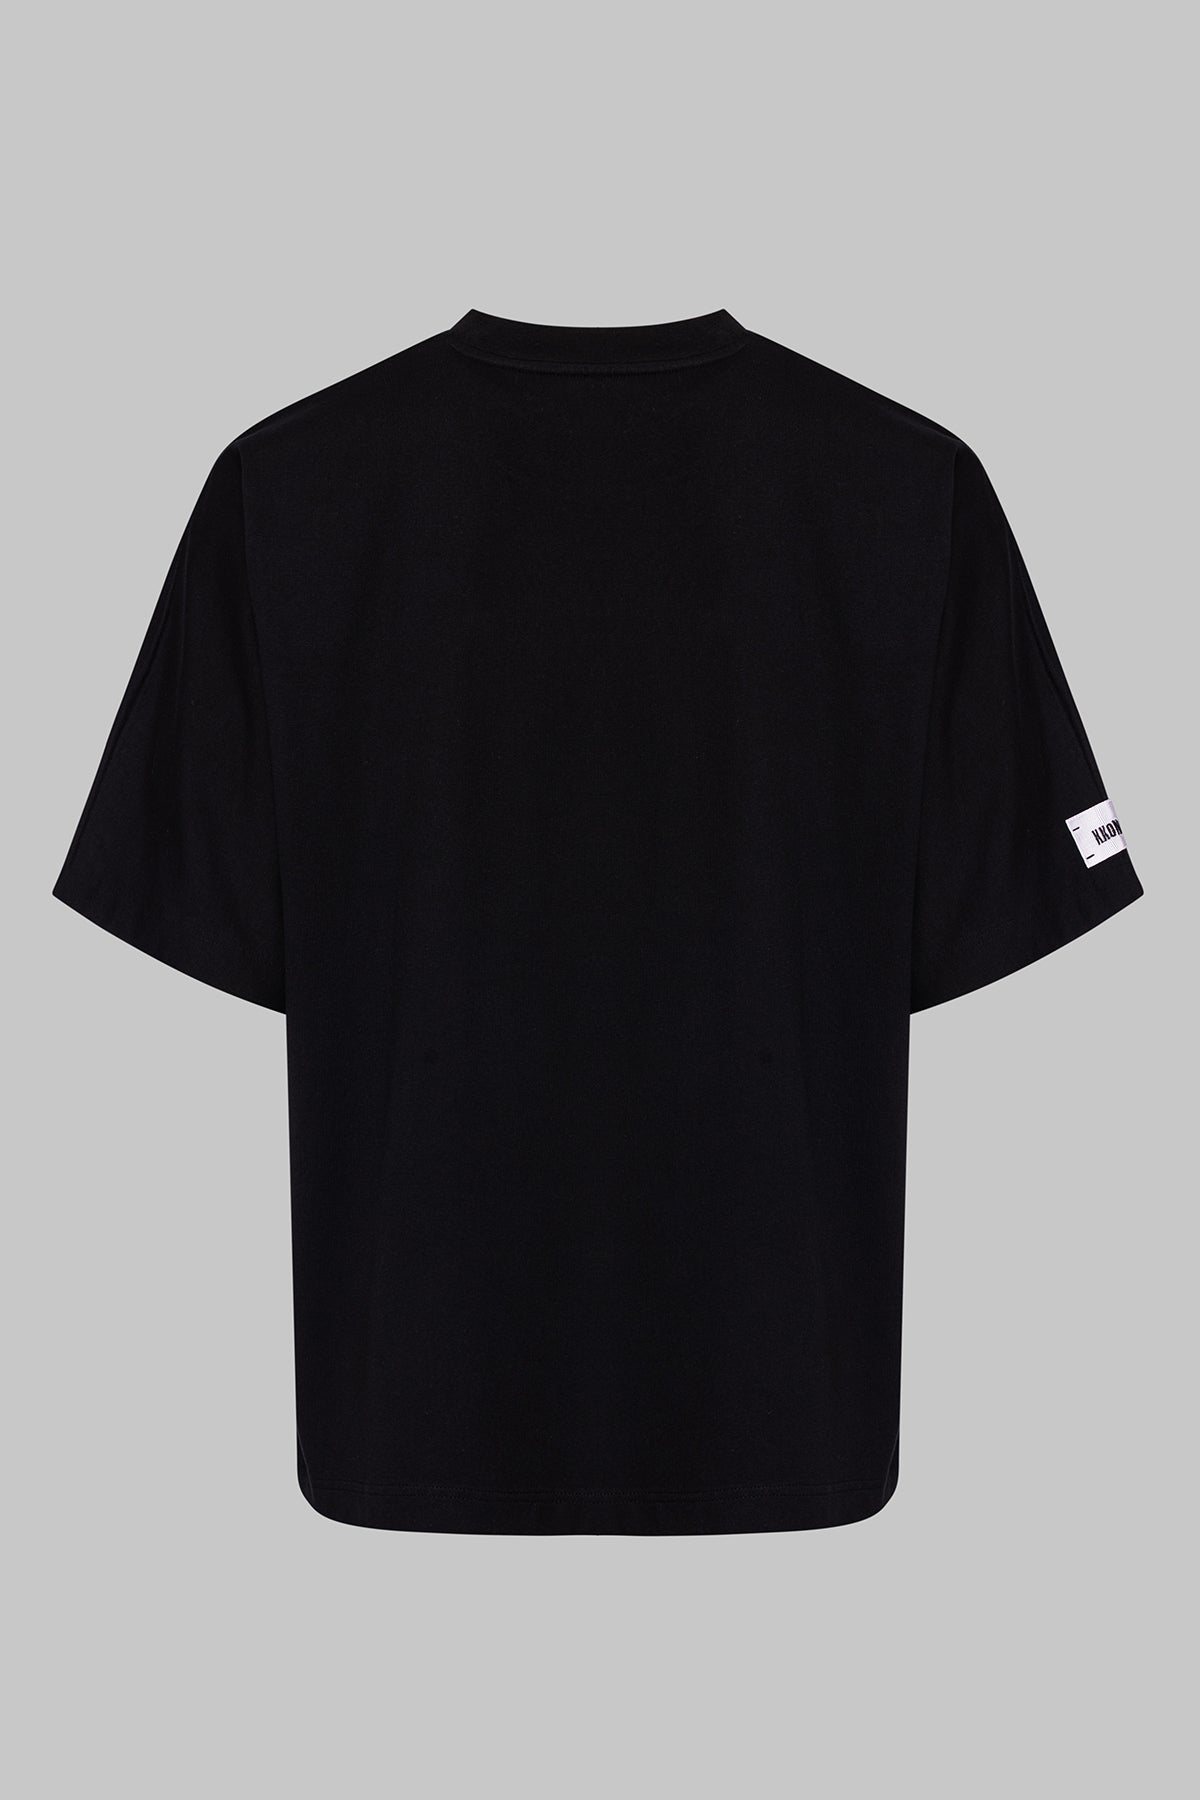 White Spade Black T-Shirt